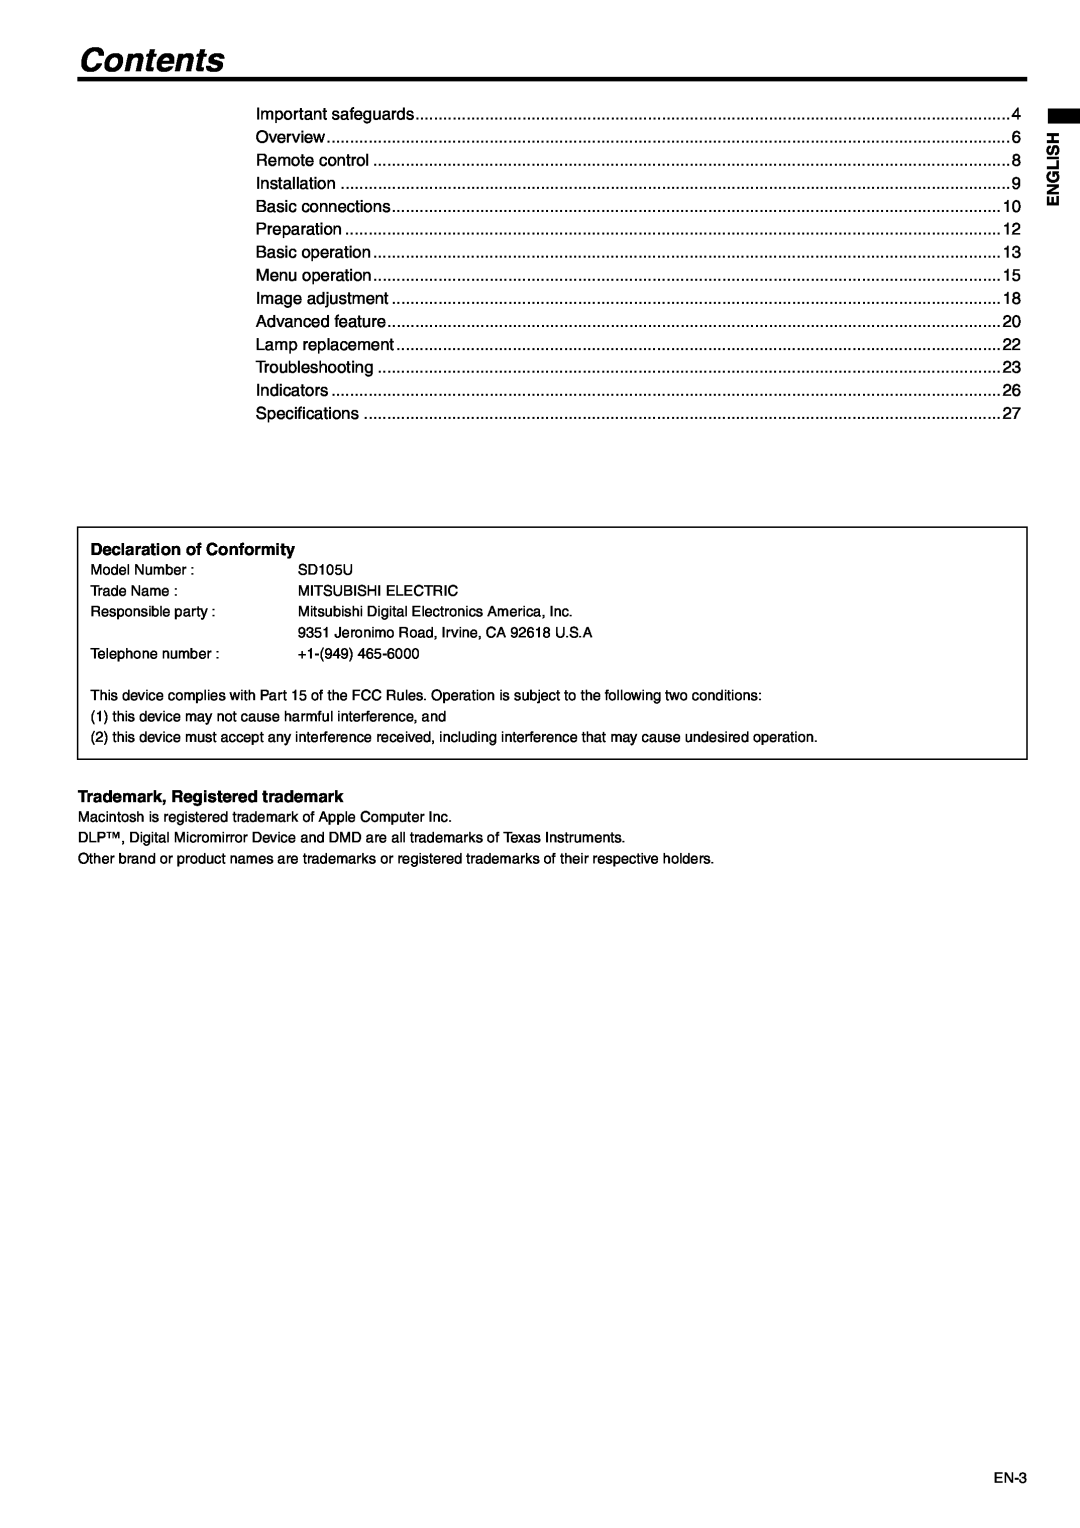 Mitsubishi Electronics SD105U user manual Contents, Declaration of Conformity, Trademark, Registered trademark, English 